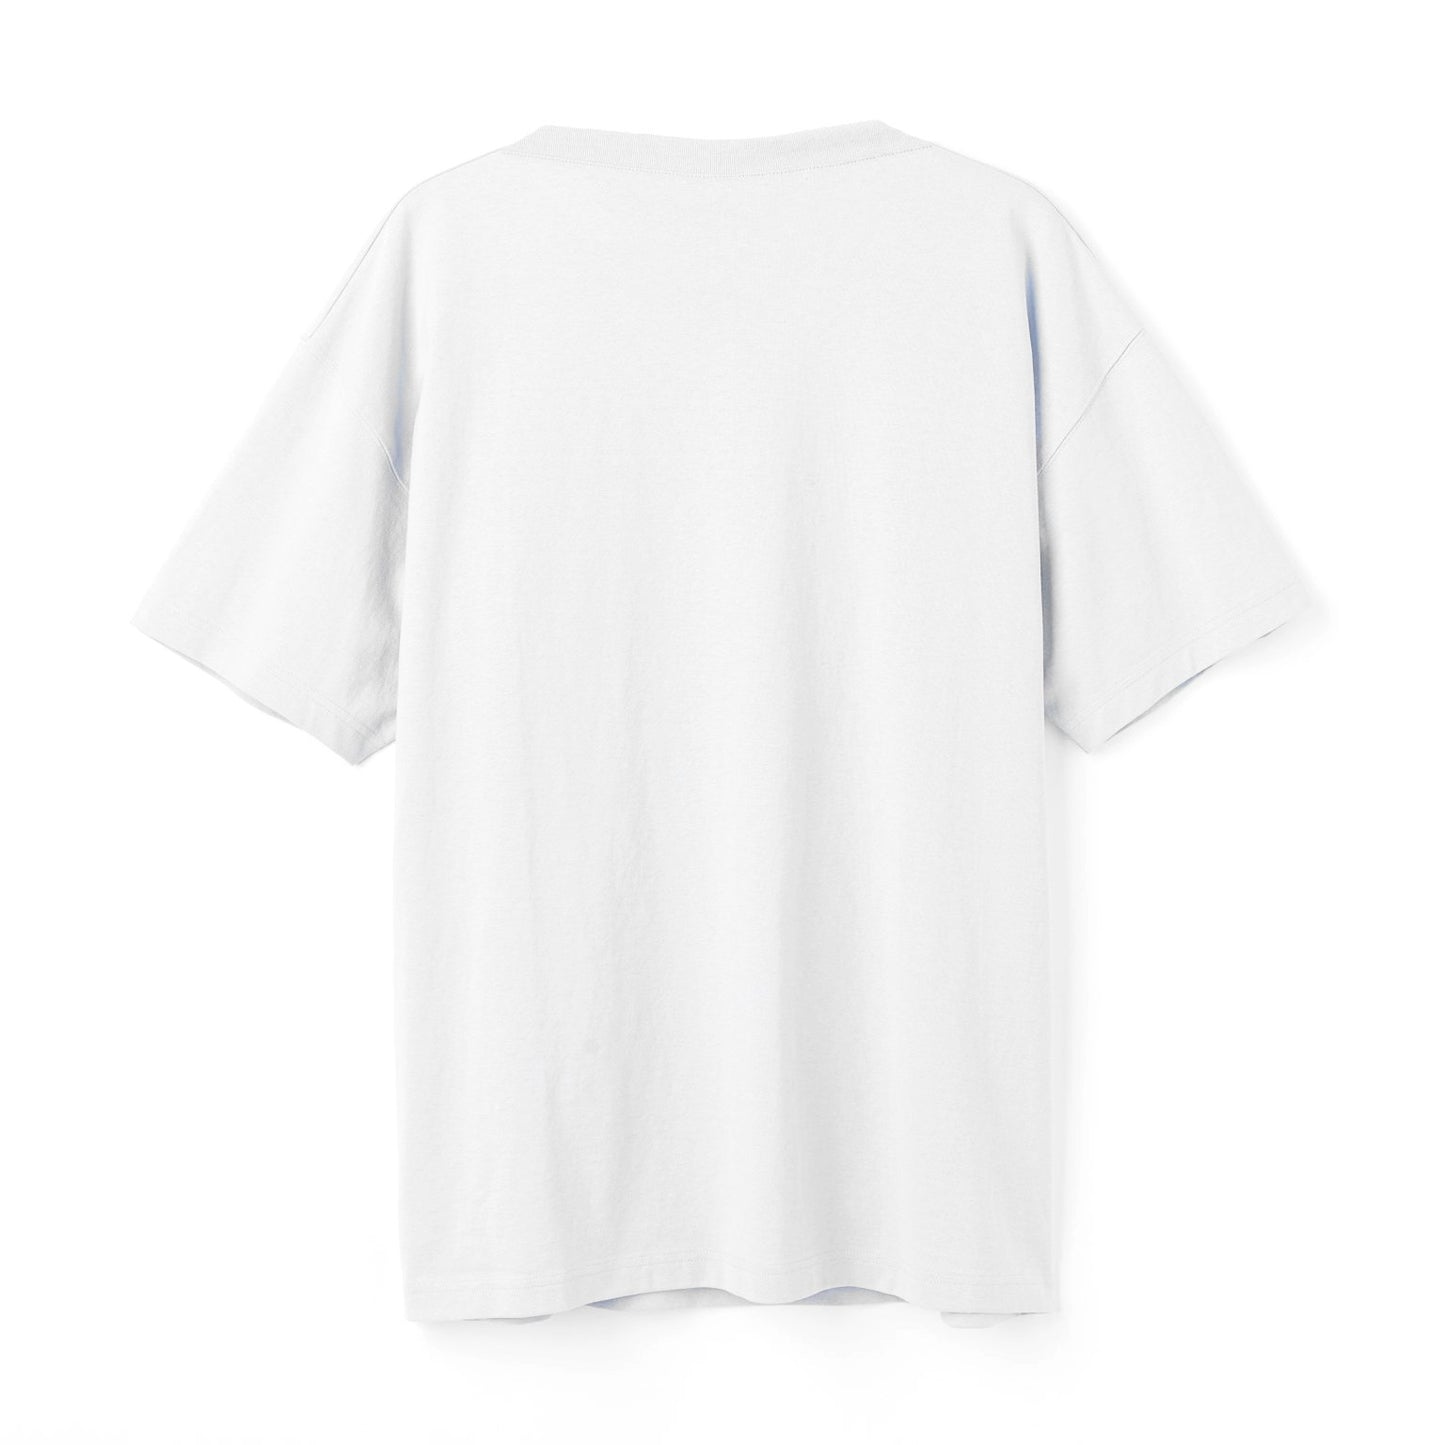 MAUI Beach Printed Oversized White Cotton T-shirt